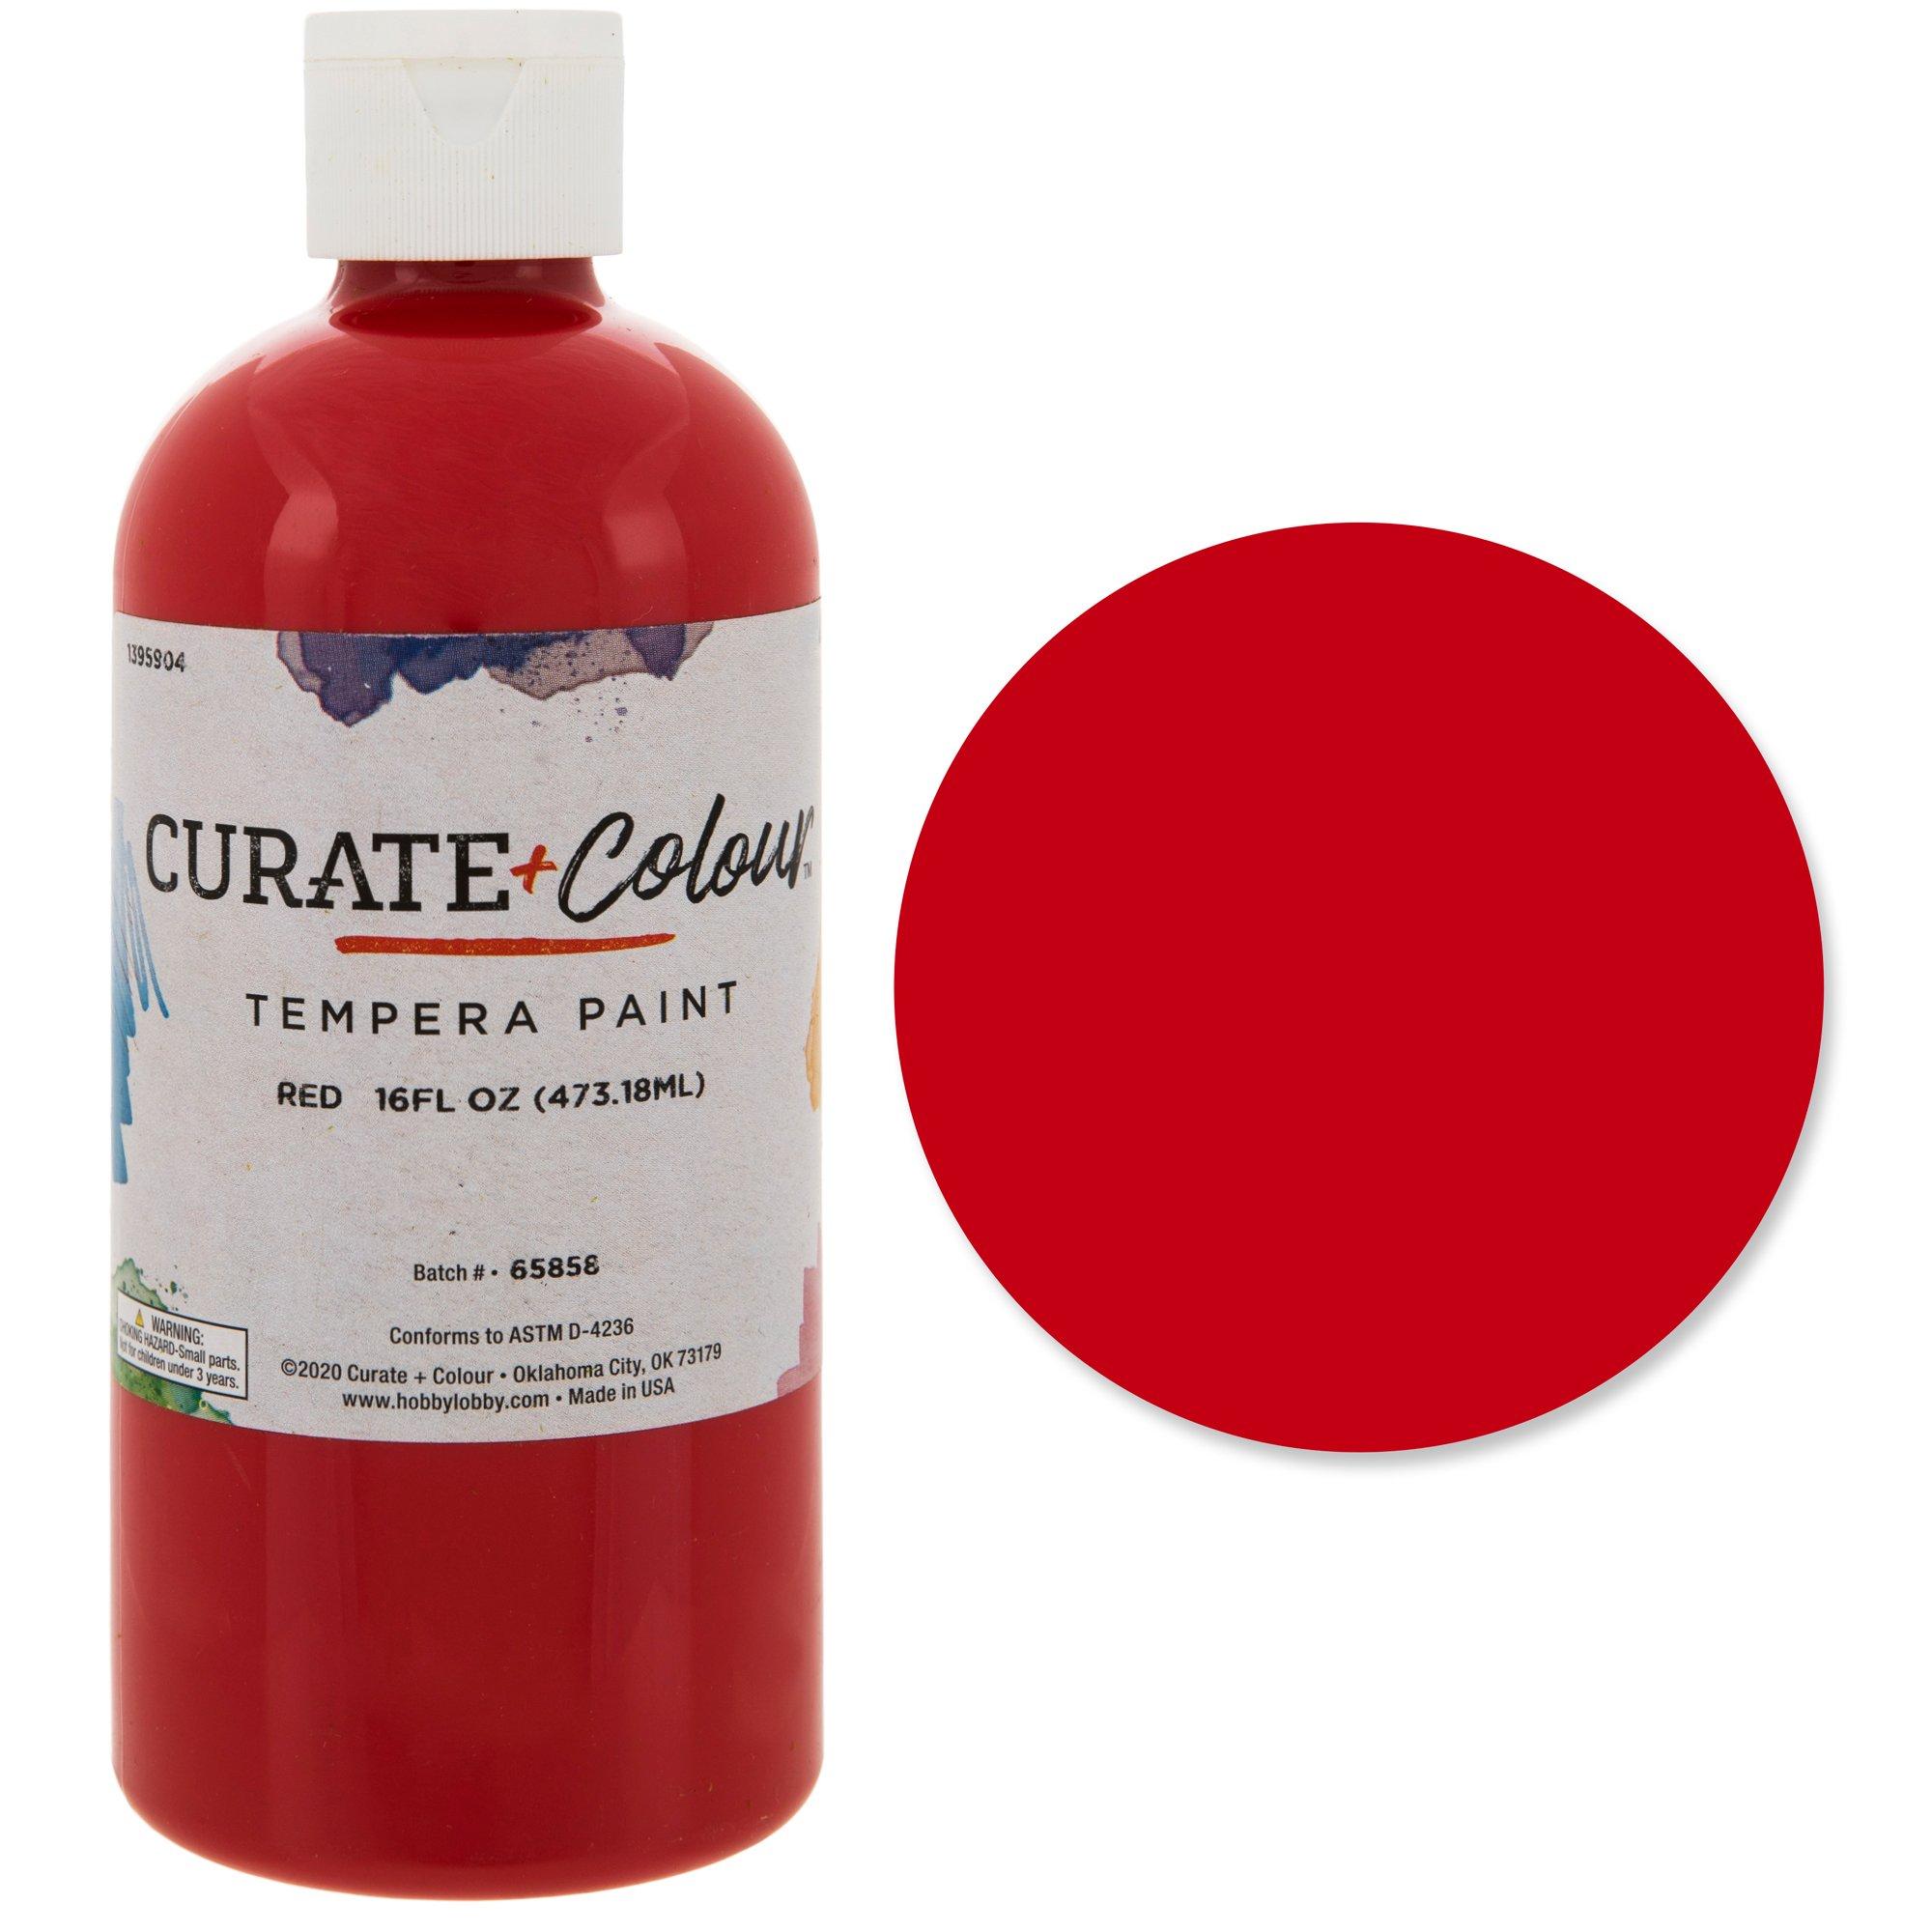 Curate + Colour Tempera Paint, Hobby Lobby